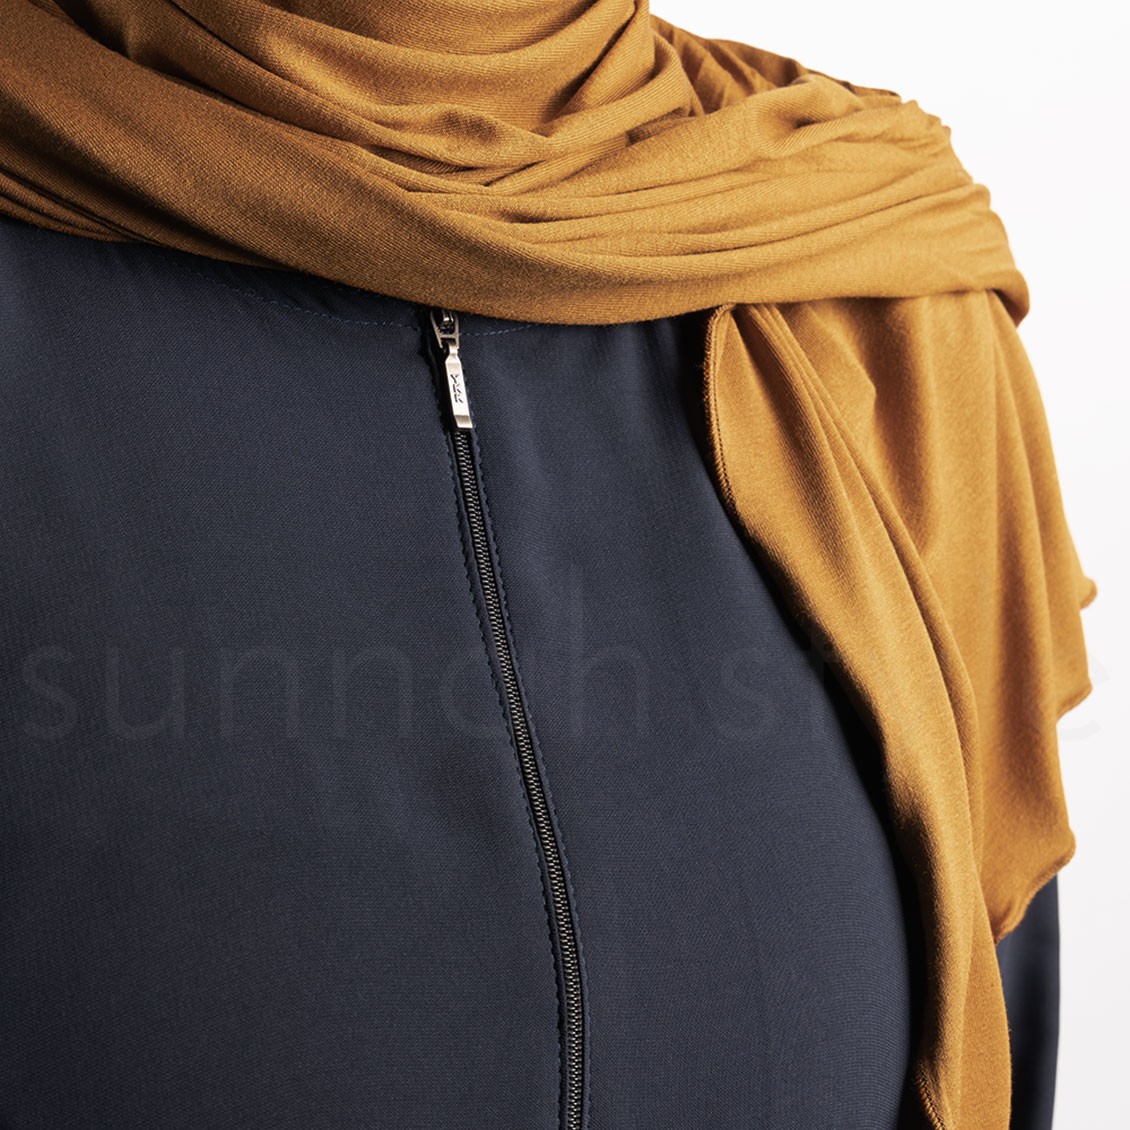 Sunnah Style Plain Closed Abaya Navy Blue